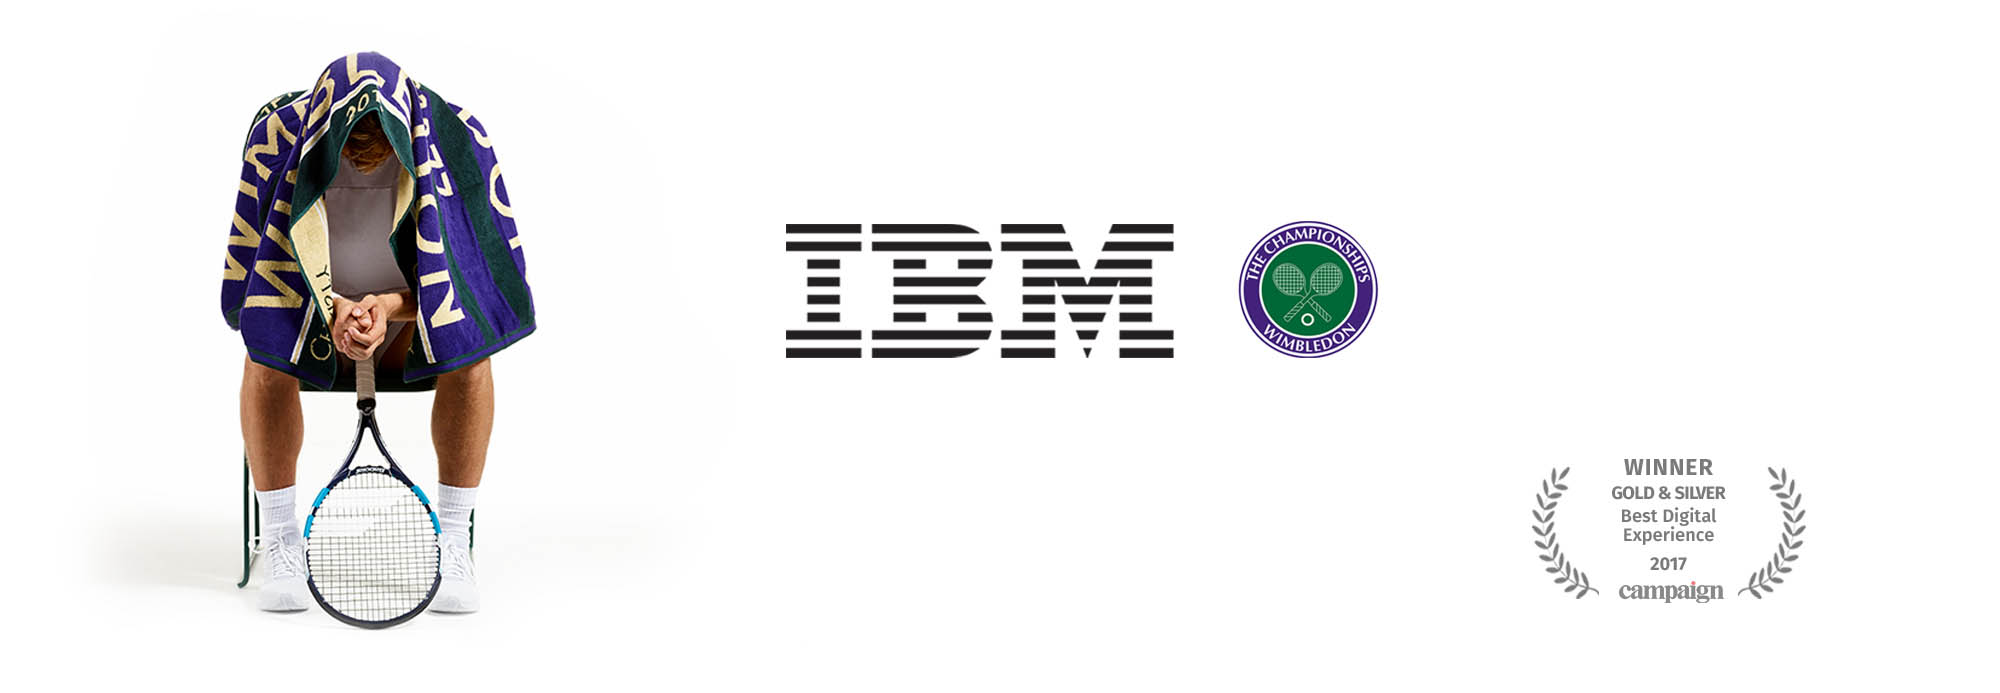 IBM BannerArtboard 1 copy3